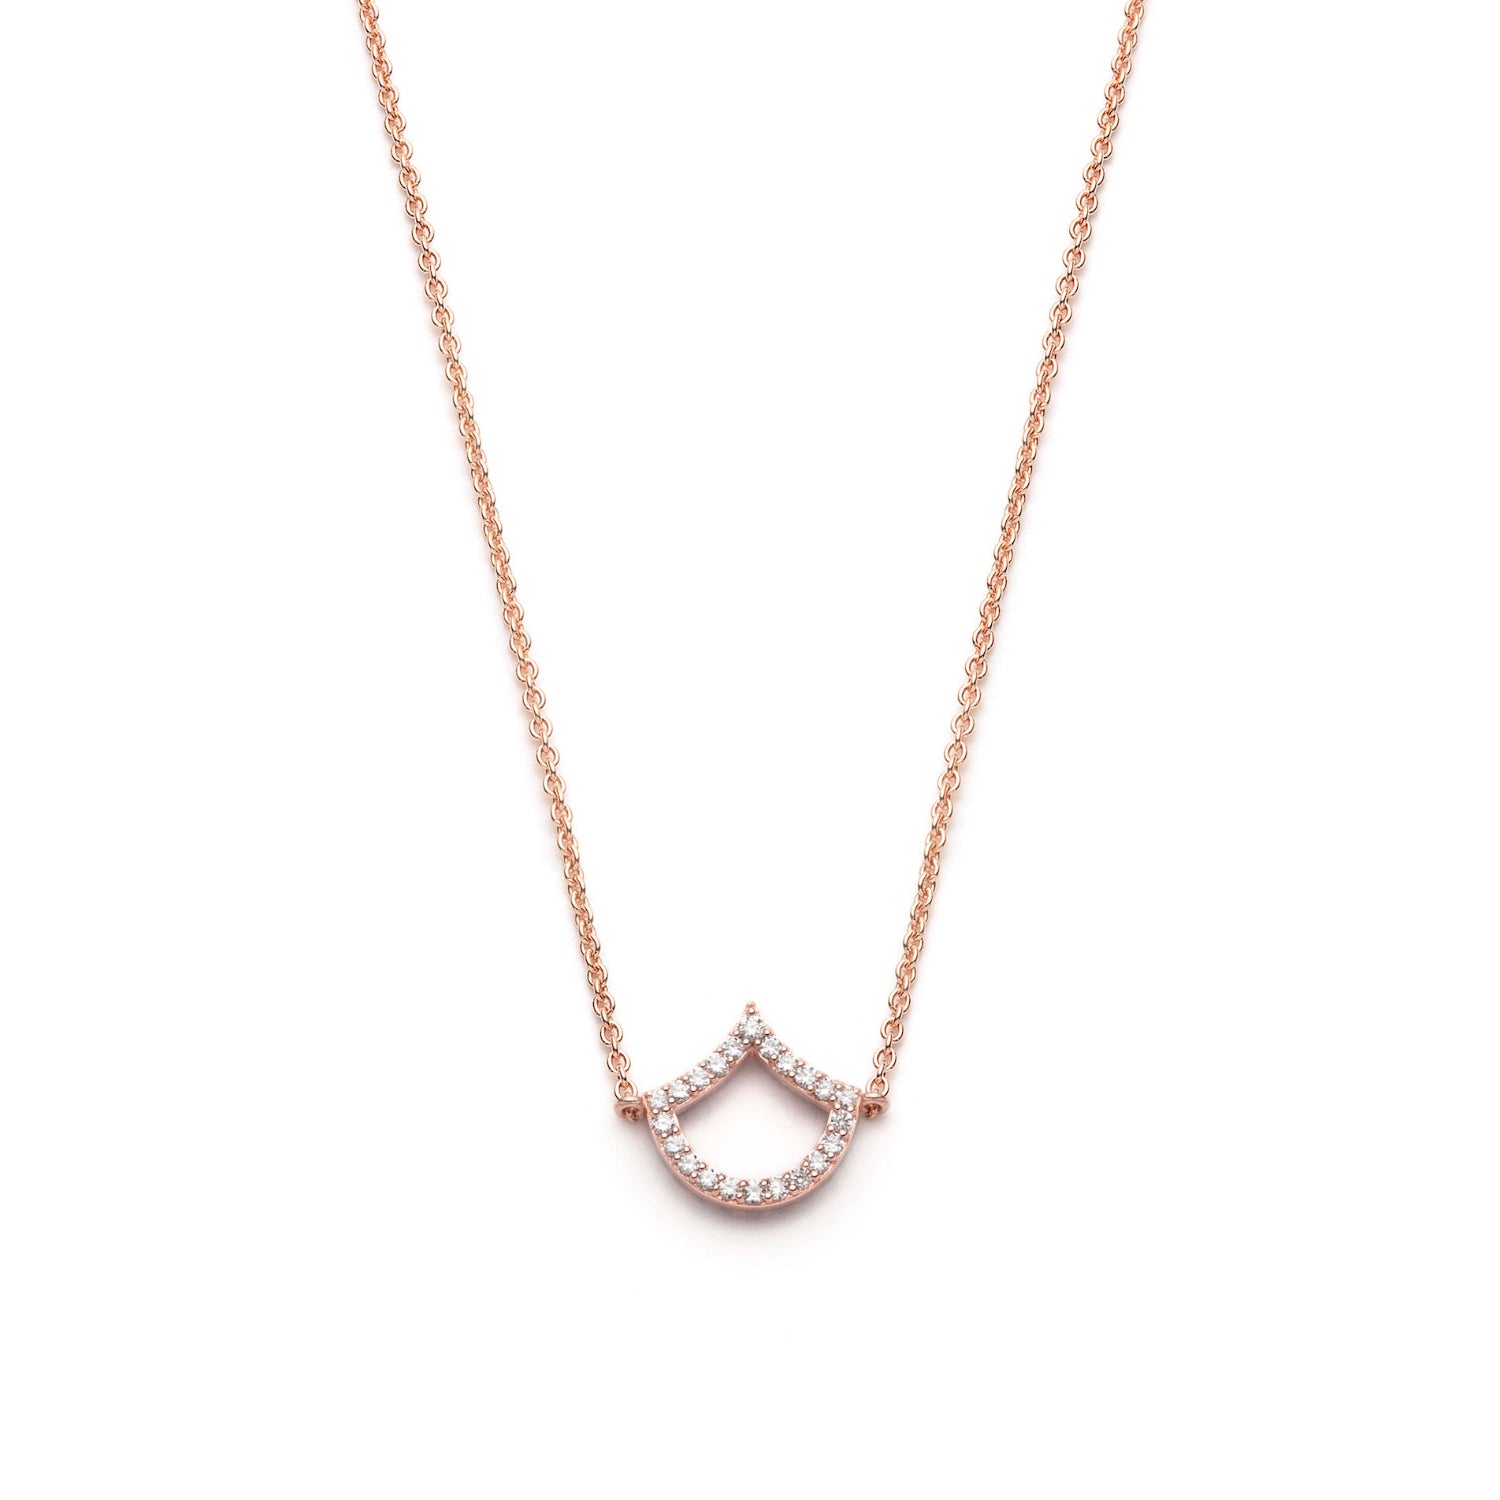 Lepi Diamond Pavé Mermaid Scale Motif Necklace in Rose Gold